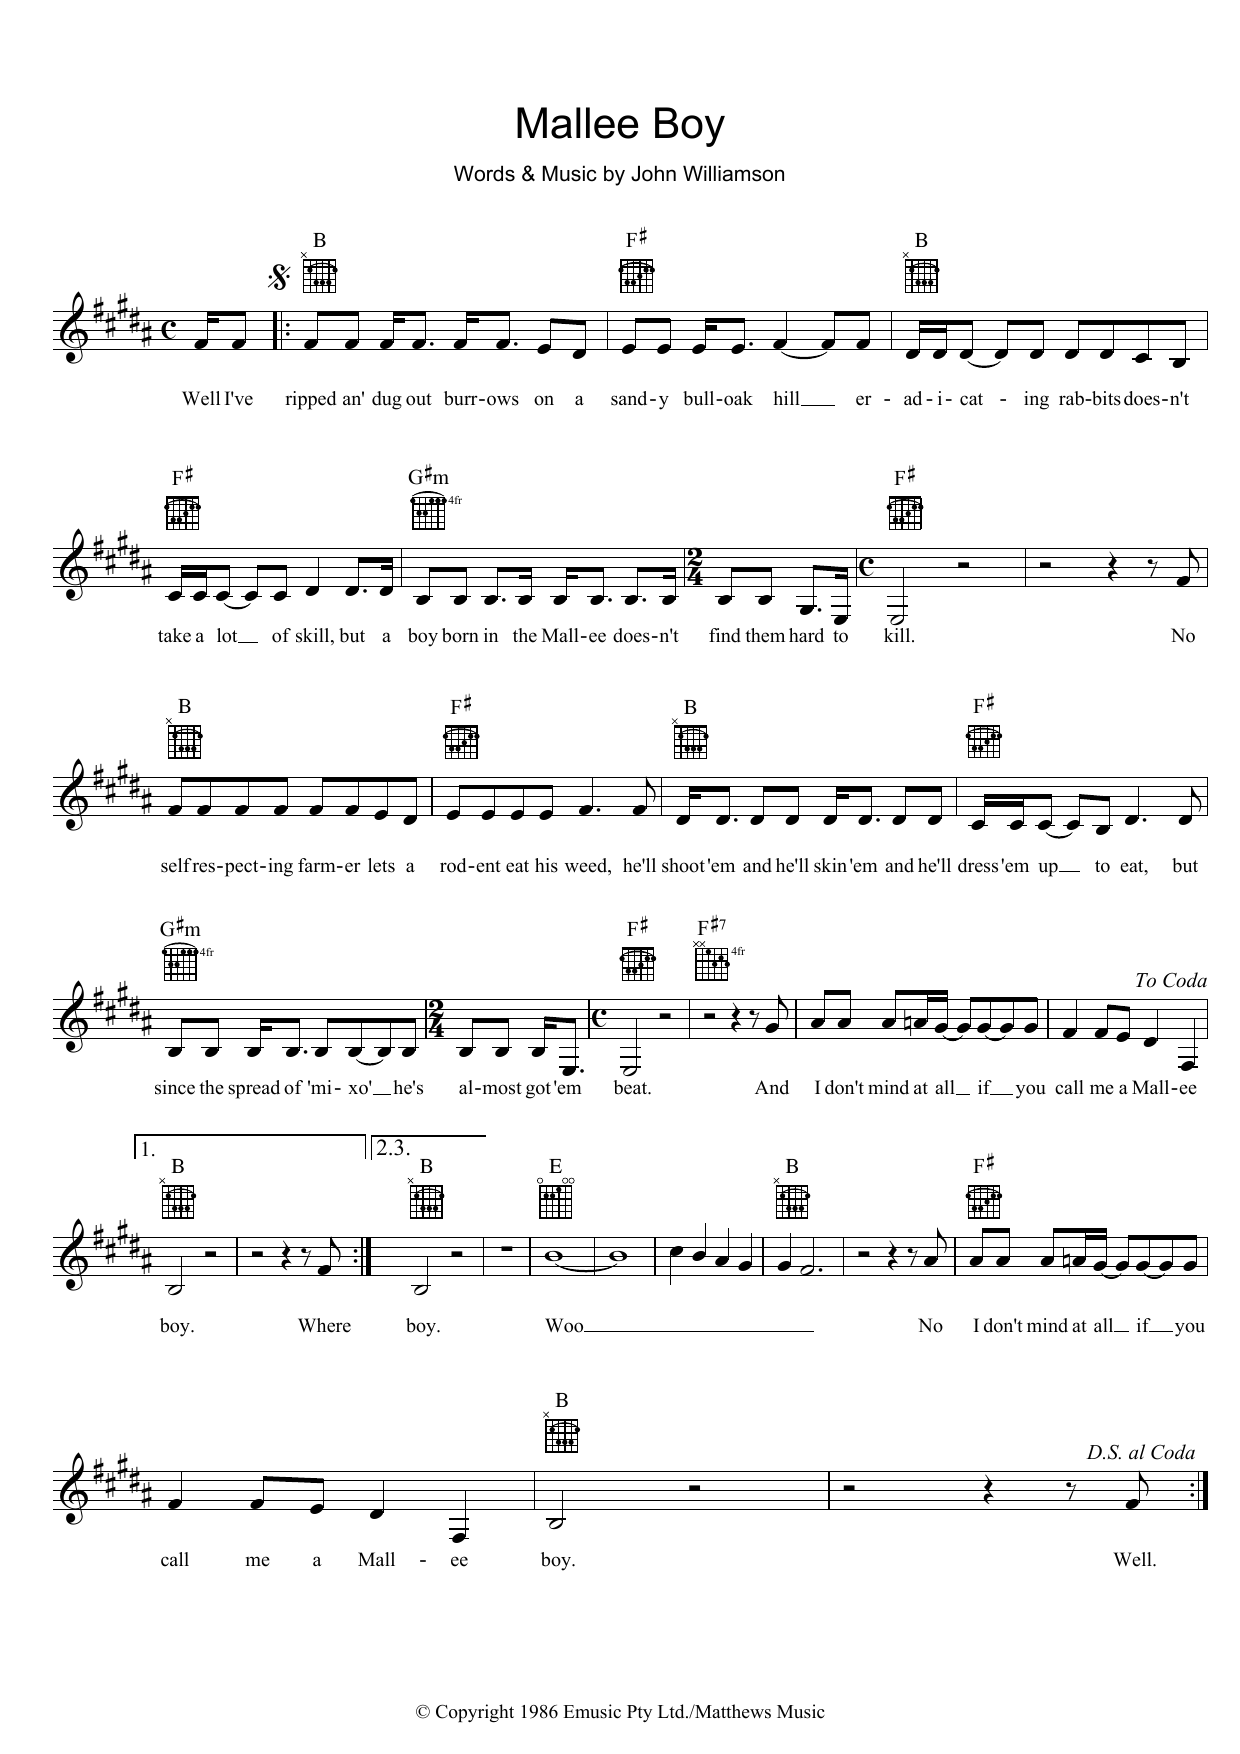 John Williamson Mallee Boy Sheet Music Notes & Chords for Melody Line, Lyrics & Chords - Download or Print PDF